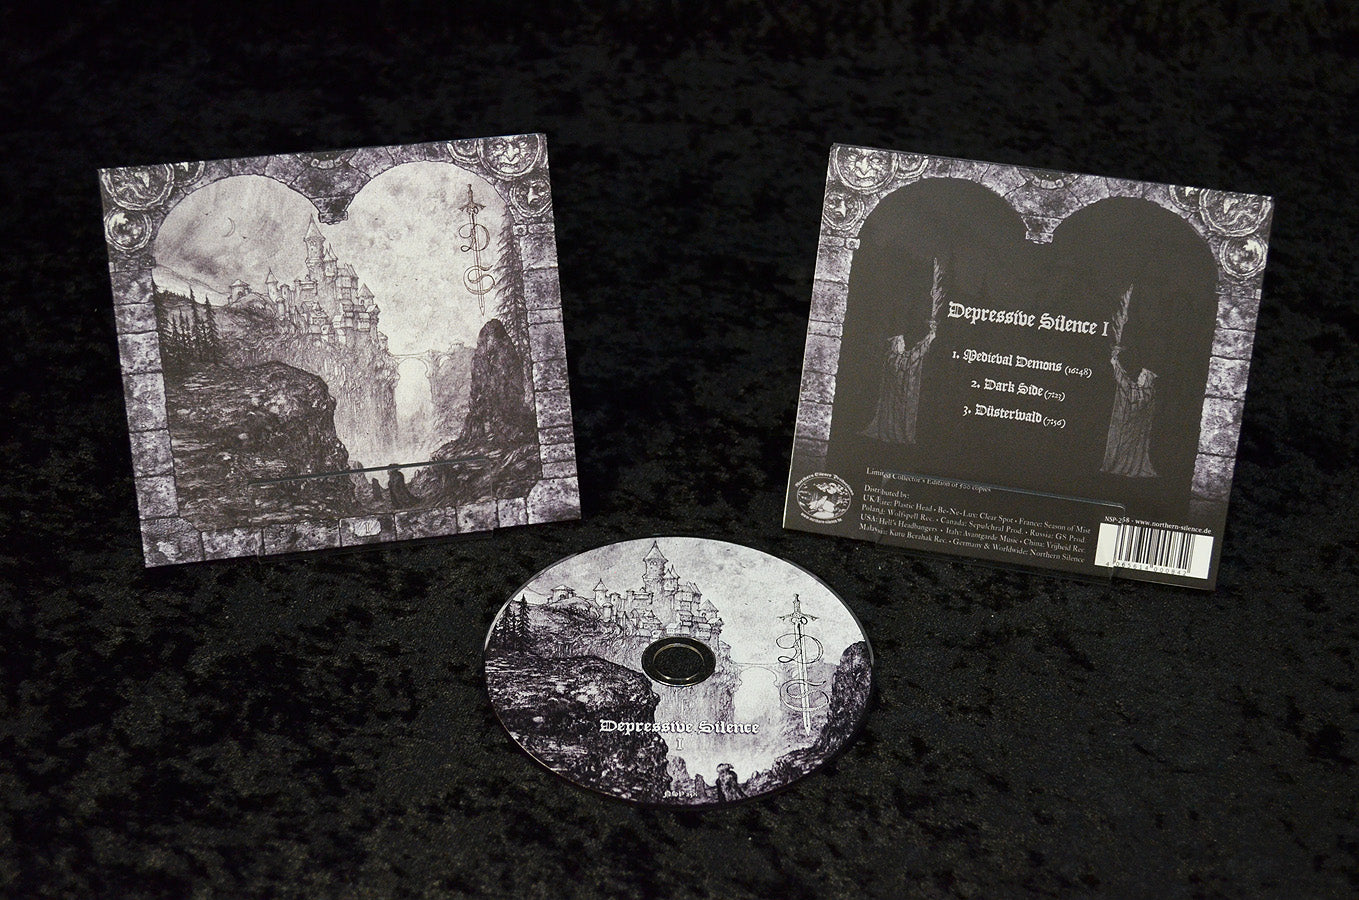 [SOLD OUT] DEPRESSIVE SILENCE "I" CD (digipak, lim.500)